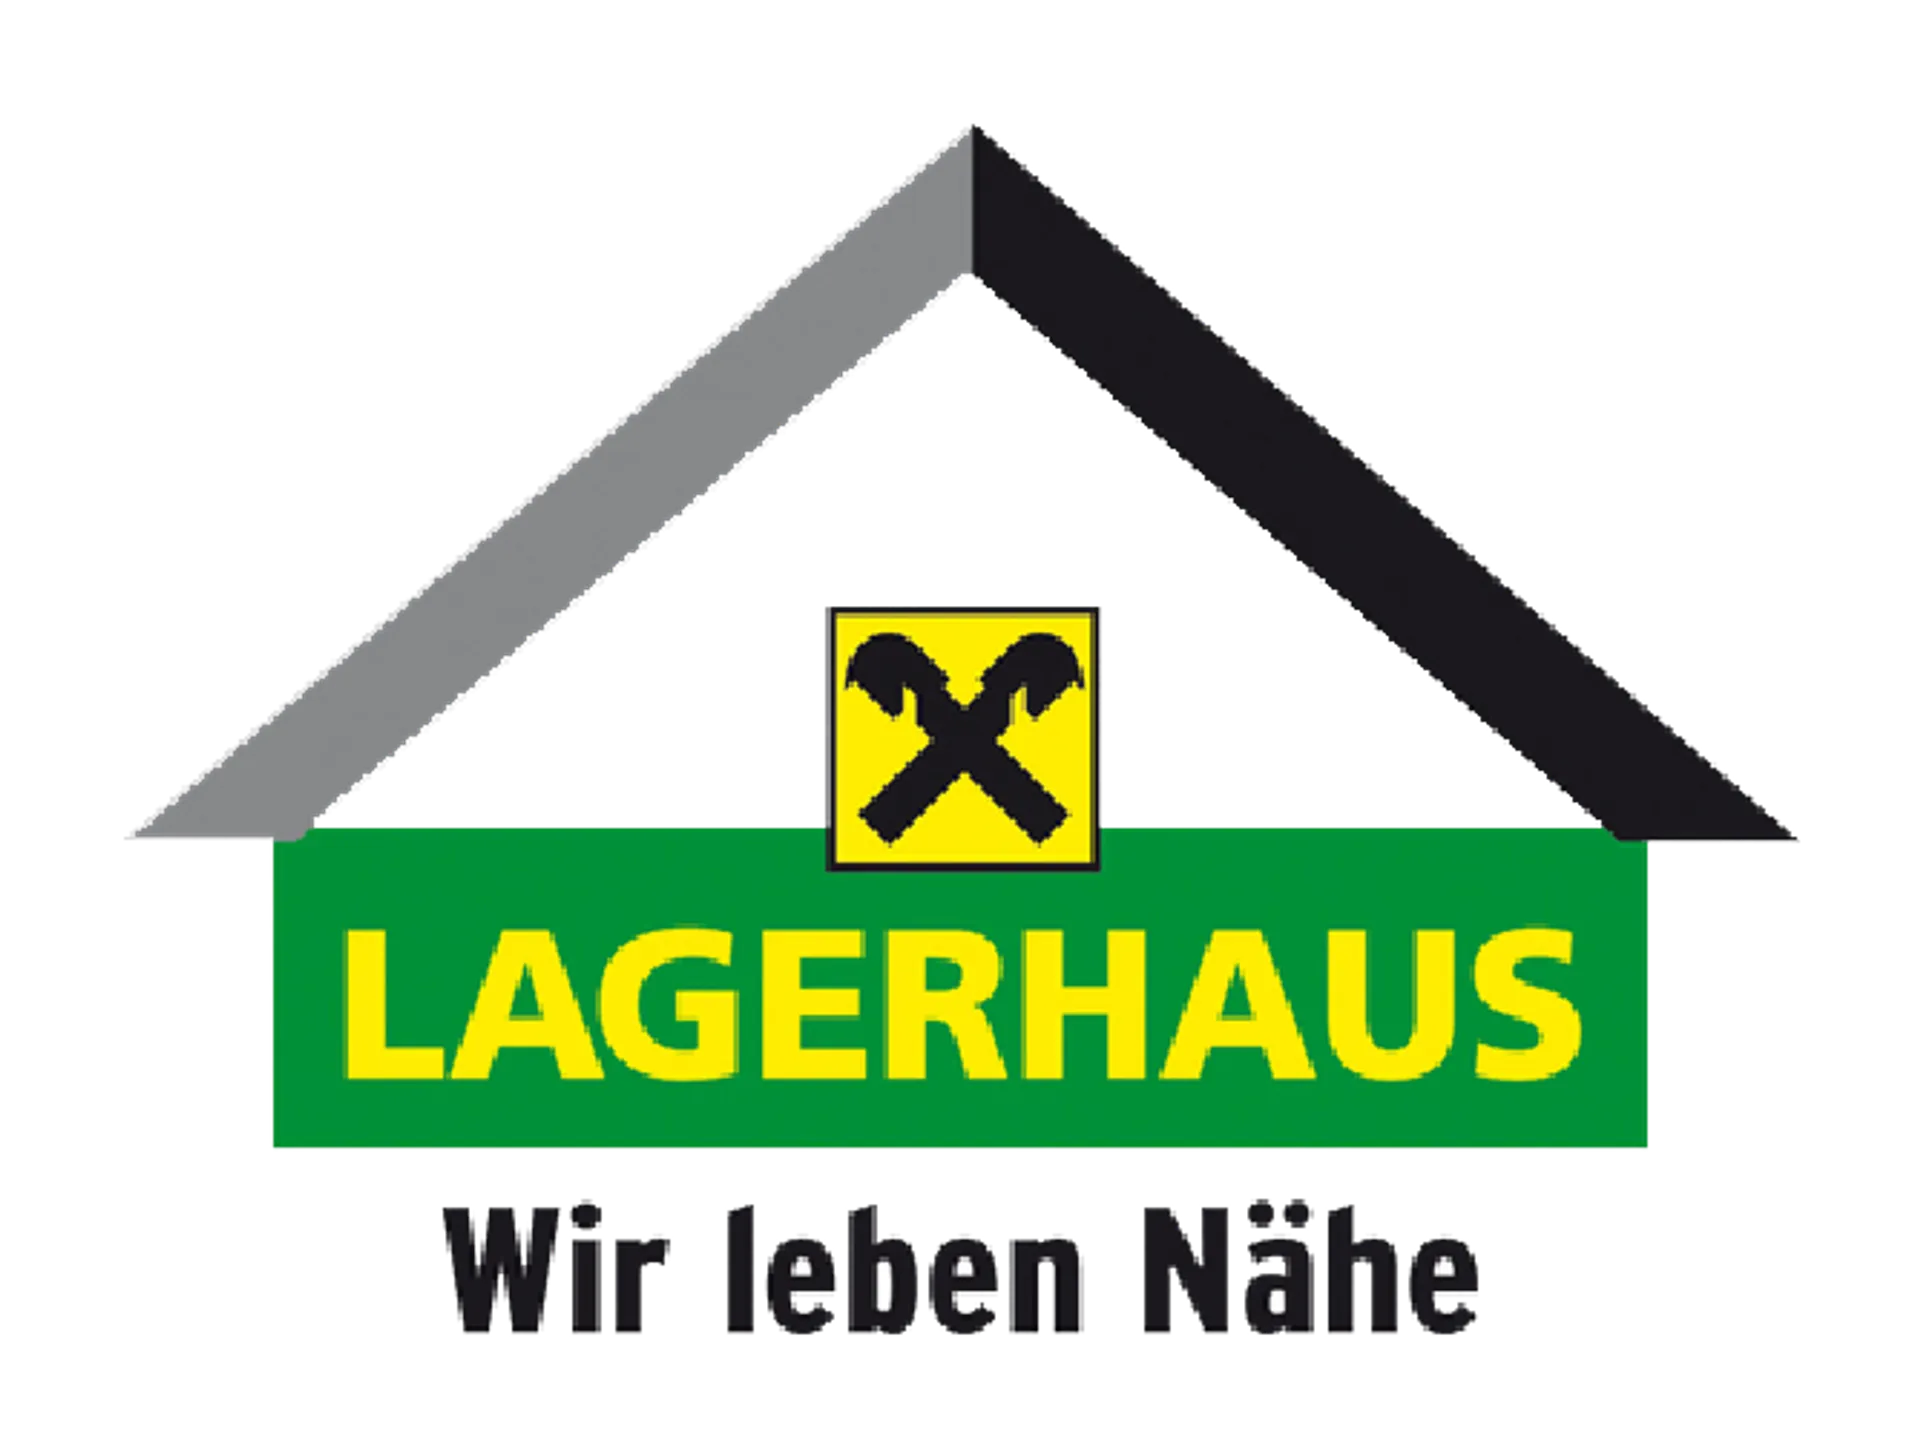 SALZBURGER LAGERHAUS logo die aktuell Flugblatt